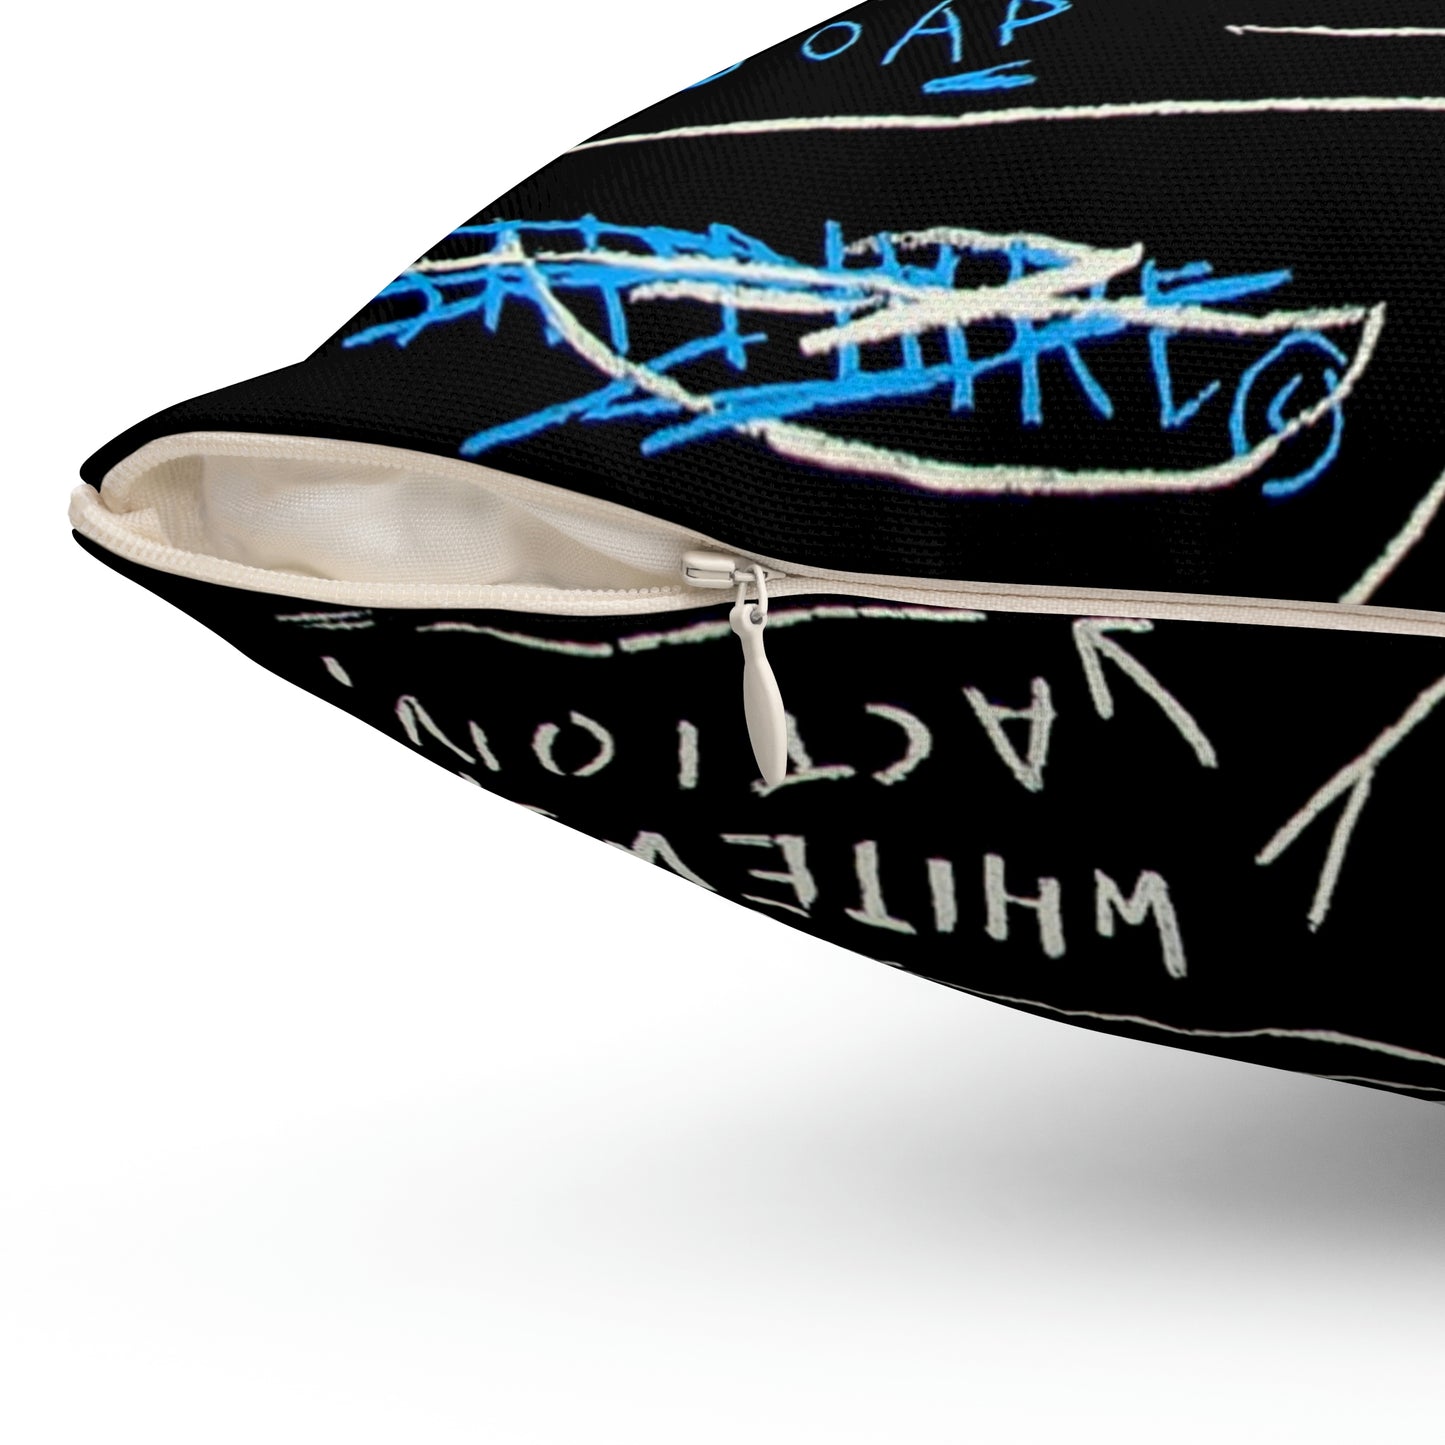 Jean-Michel Basquiat "Rinso" Artwork Square Throw Pillow